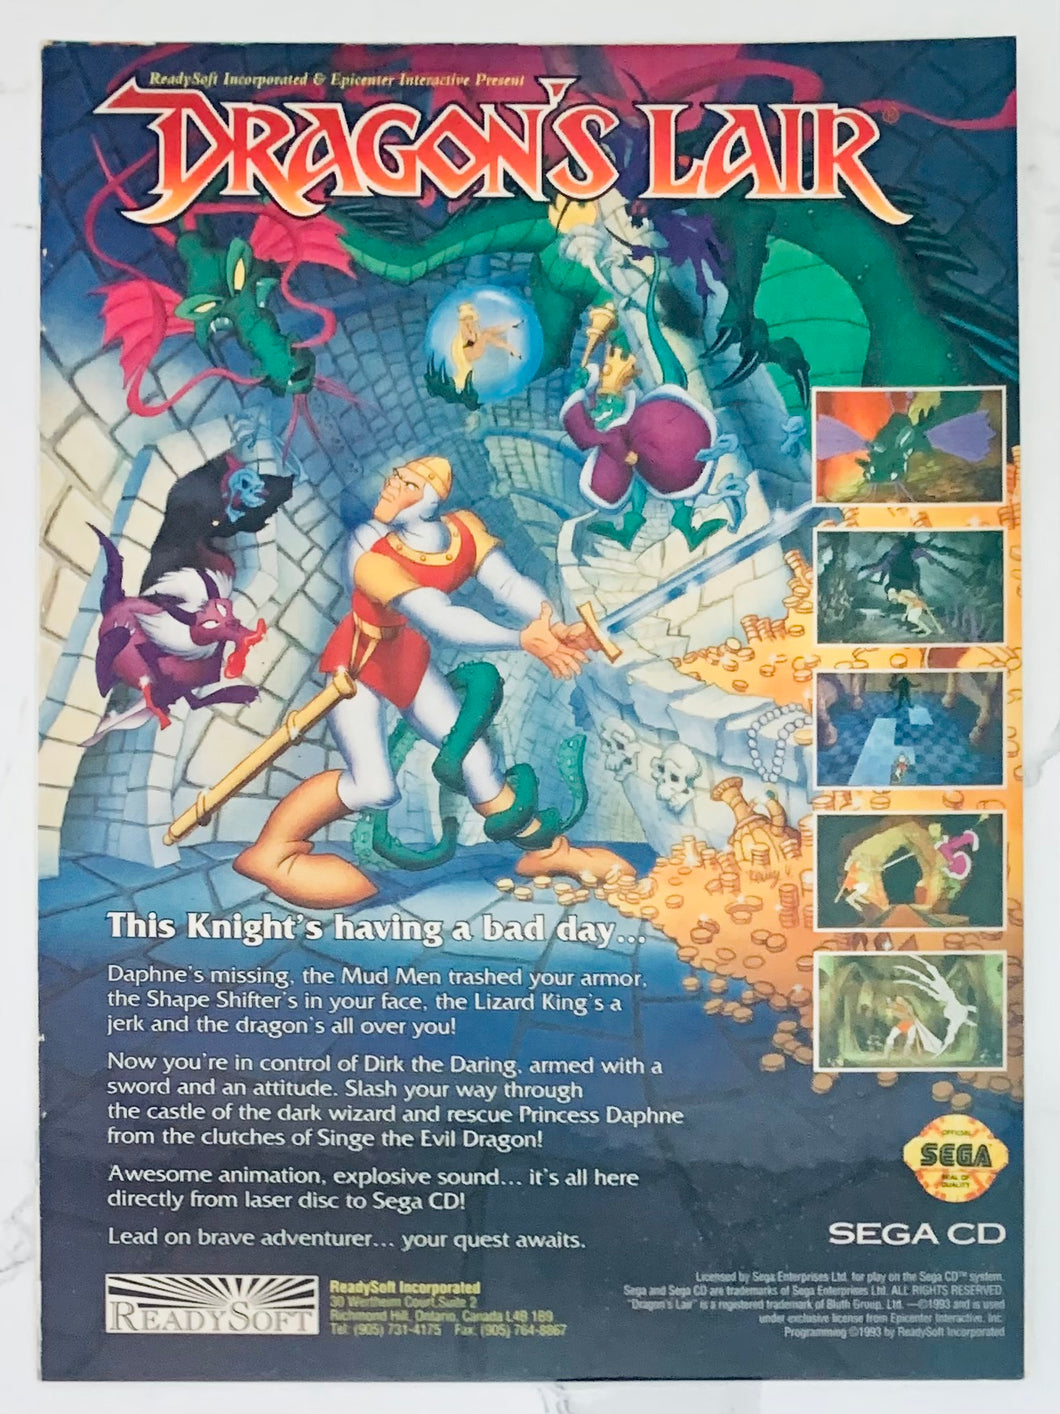 Dragon’s Lair - SEGA CD - Original Vintage Advertisement - Print Ads - Laminated A4 Poster